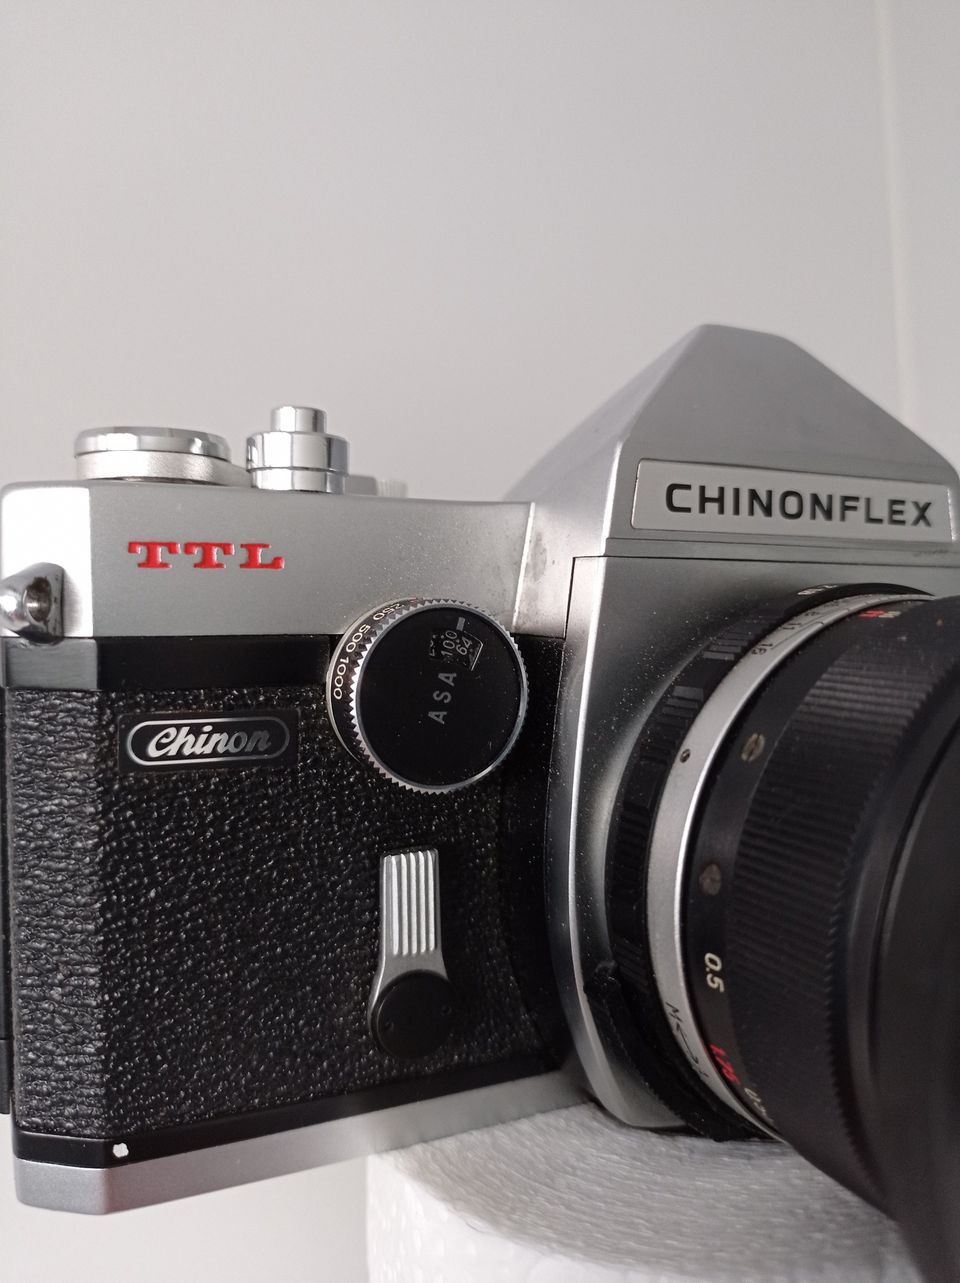 Chinonflex kamera